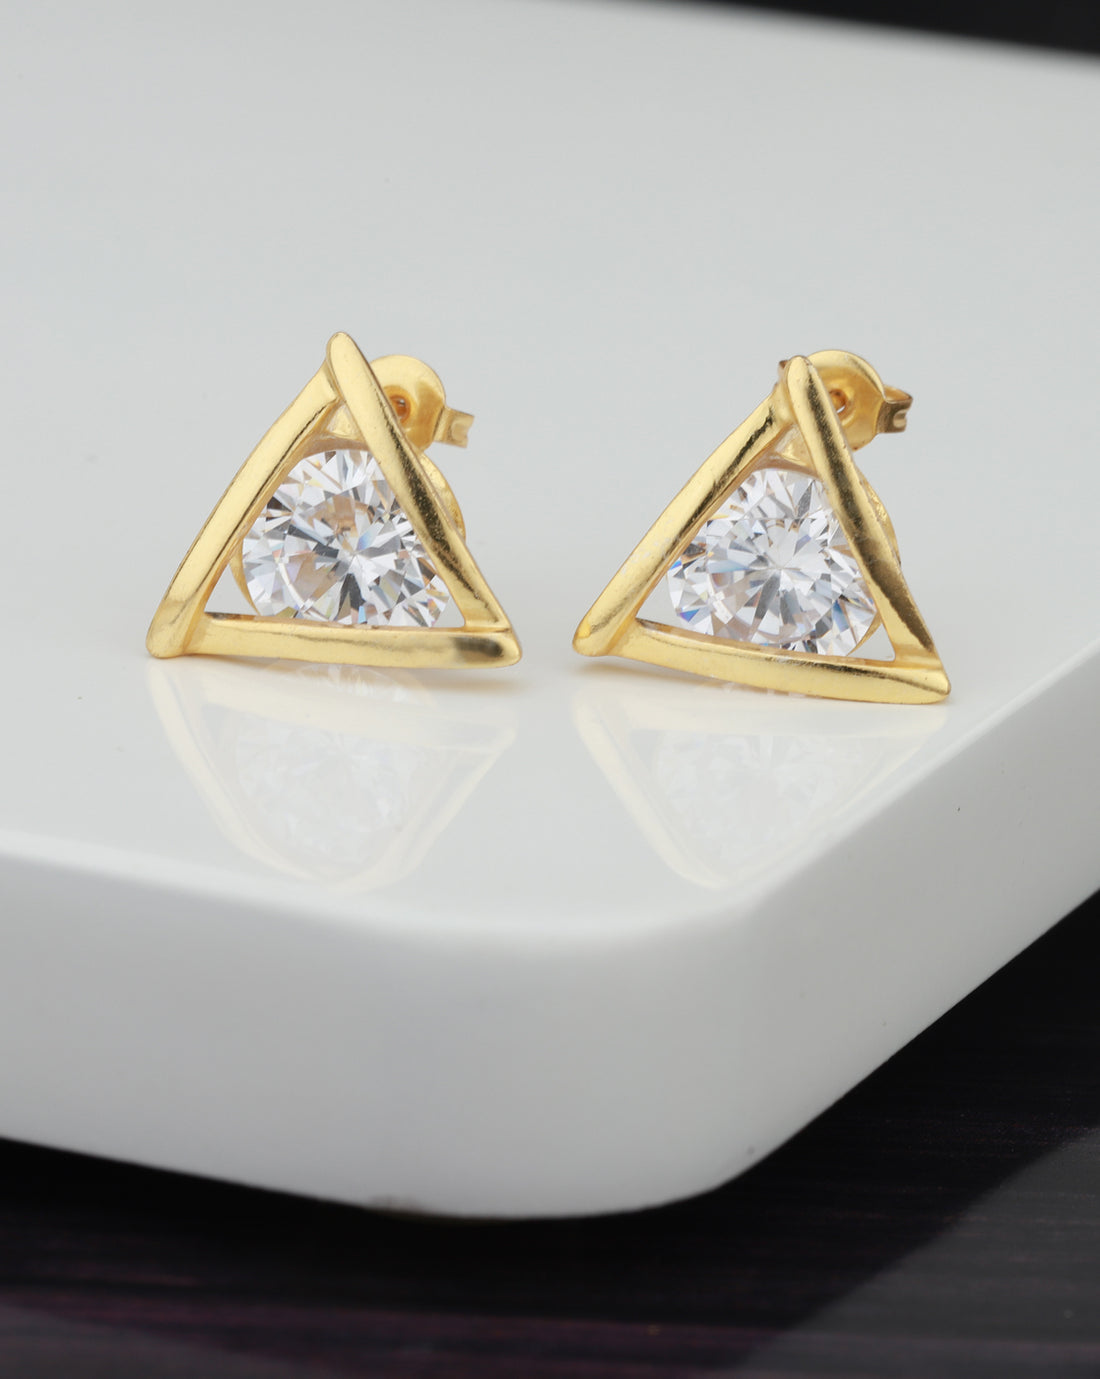 Carlton London Gold Plated Cz Triangular Stud Earring For Women